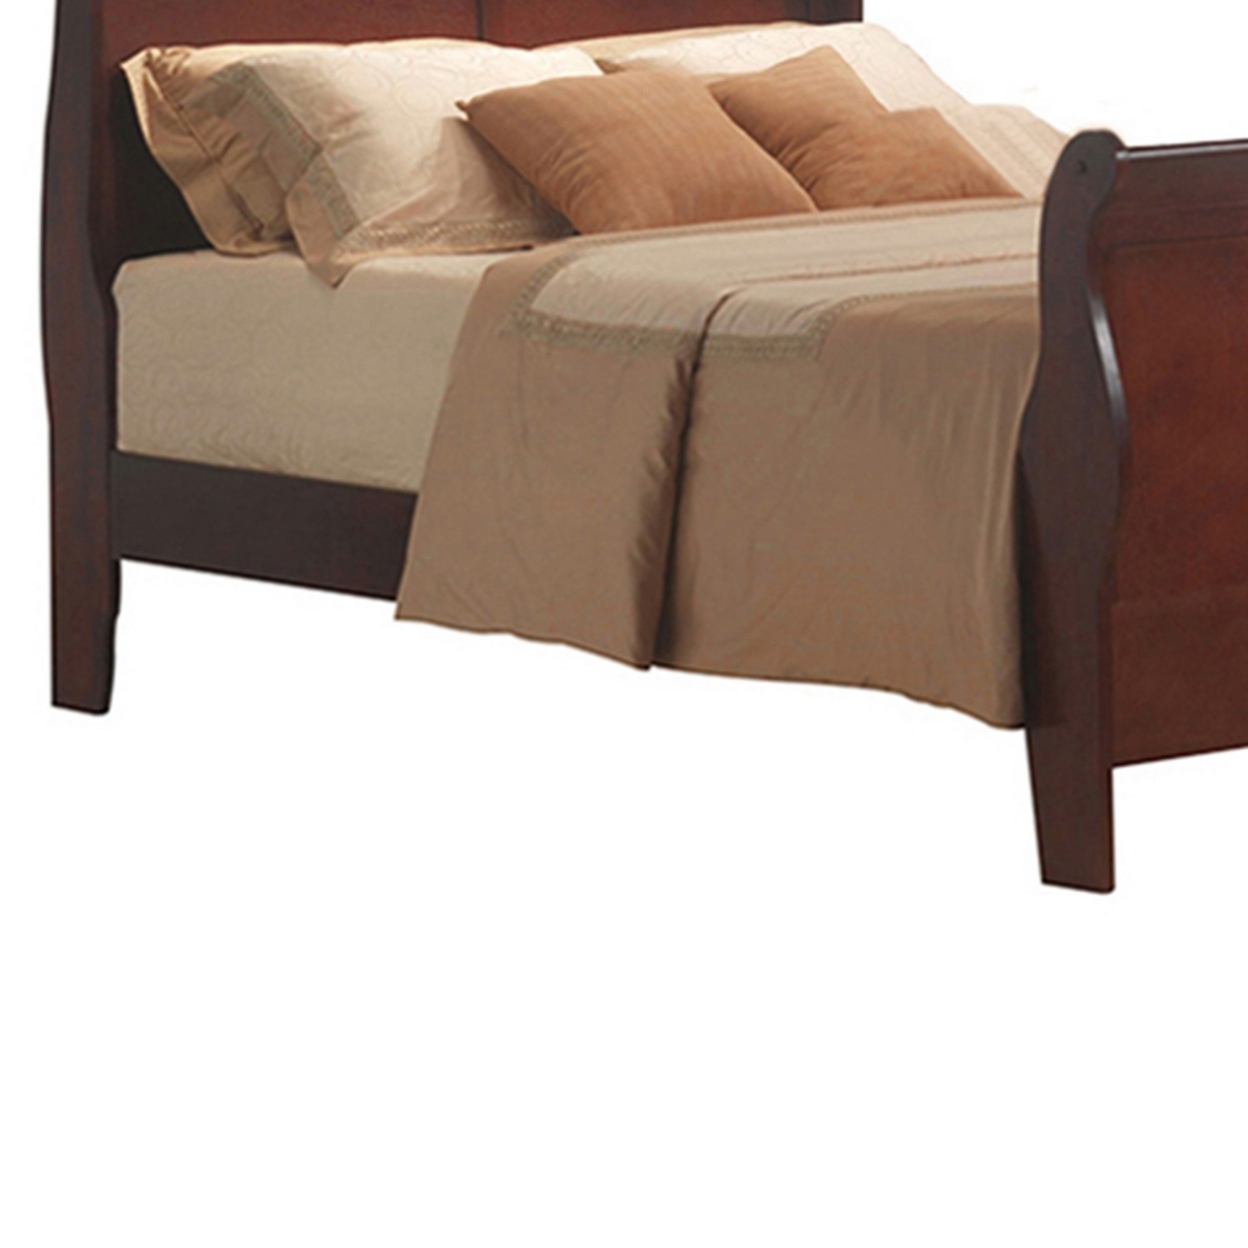 Wooden Full Size Bed With Slat Kit, Brown- Saltoro Sherpi